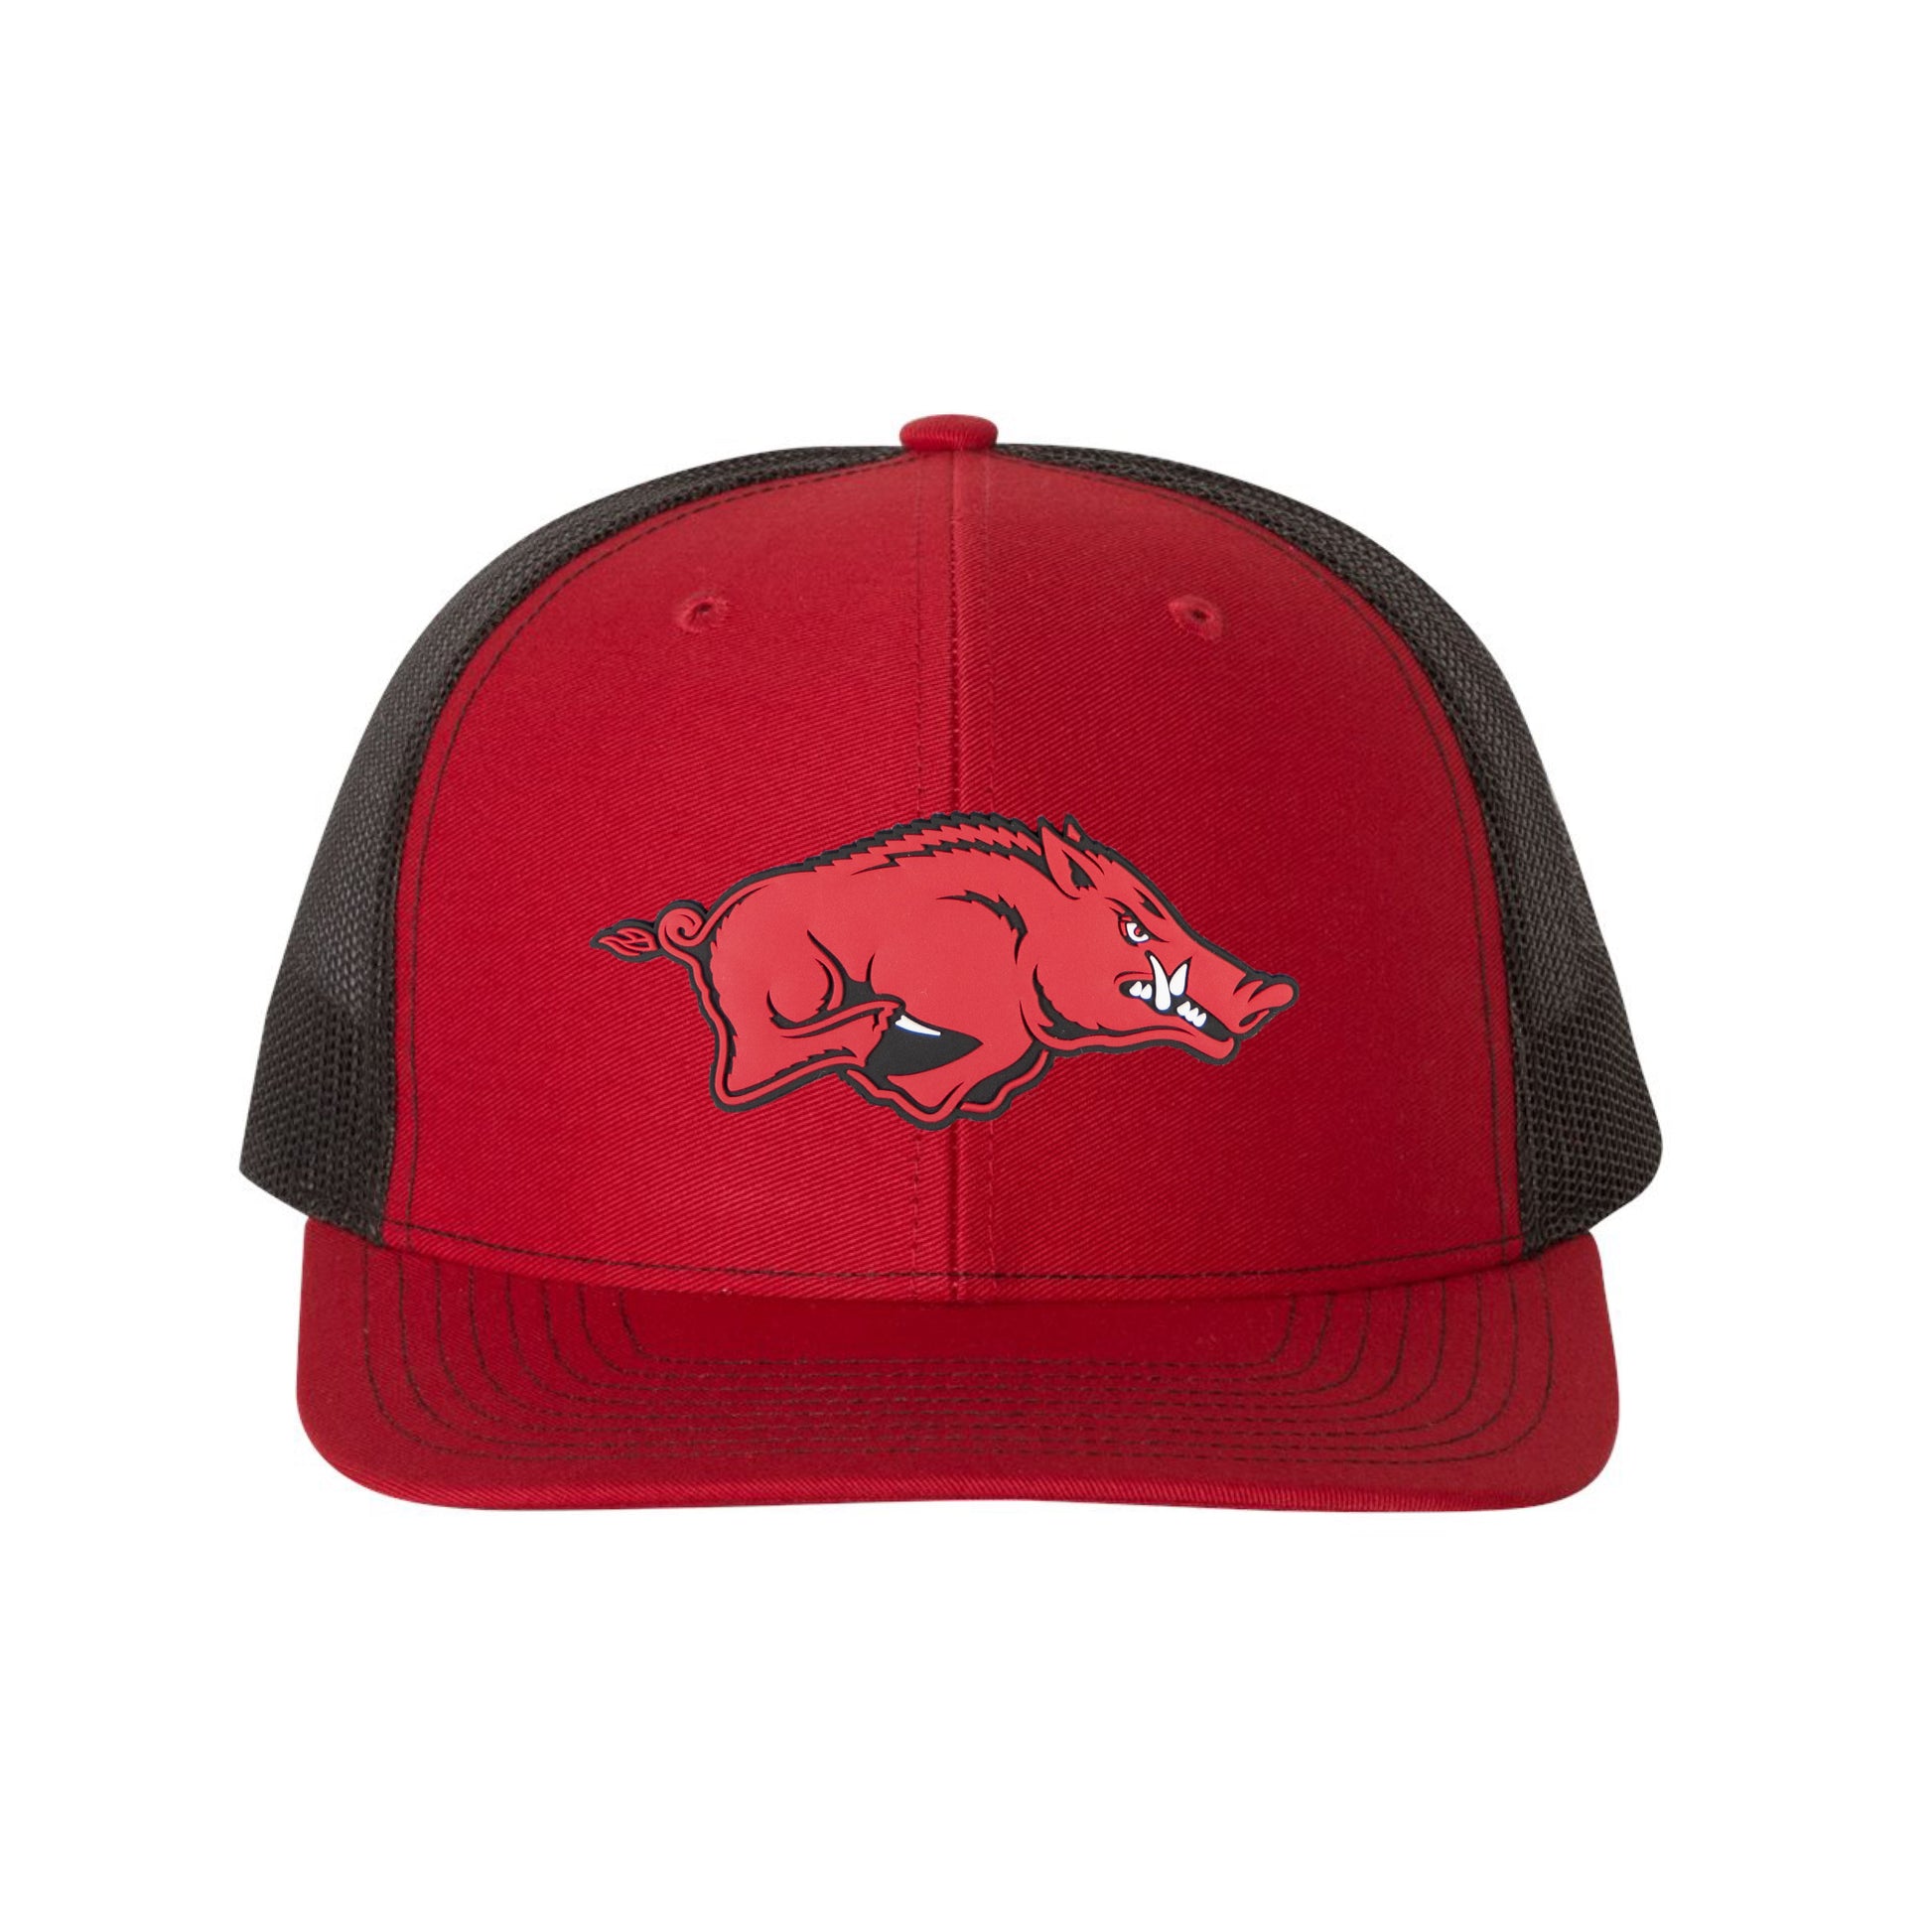 Arkansas Razorbacks 3D Snapback Trucker Hat- Red/ Black - Ten Gallon Hat Co.